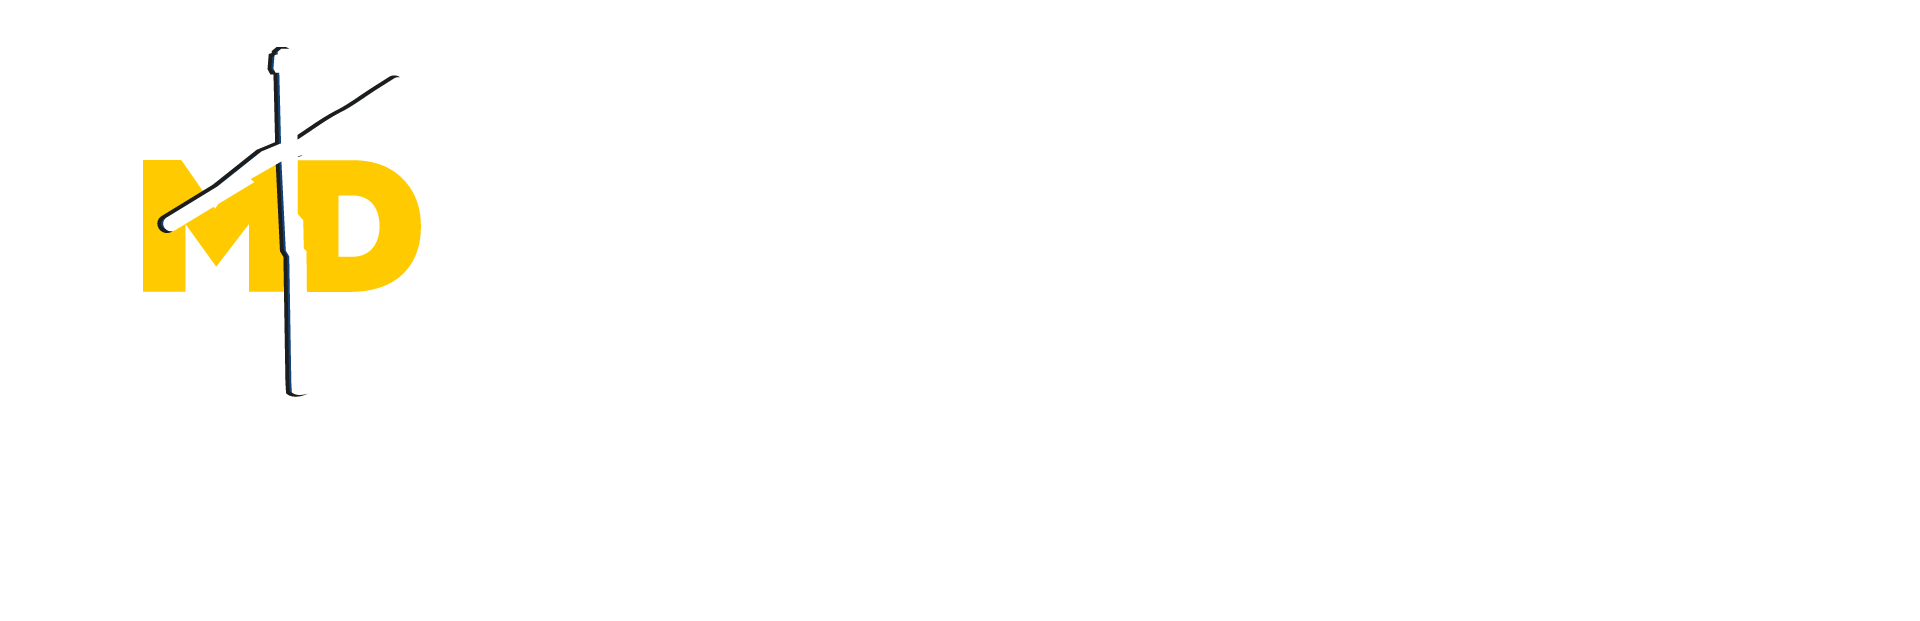 Logo parque científico de innovación social